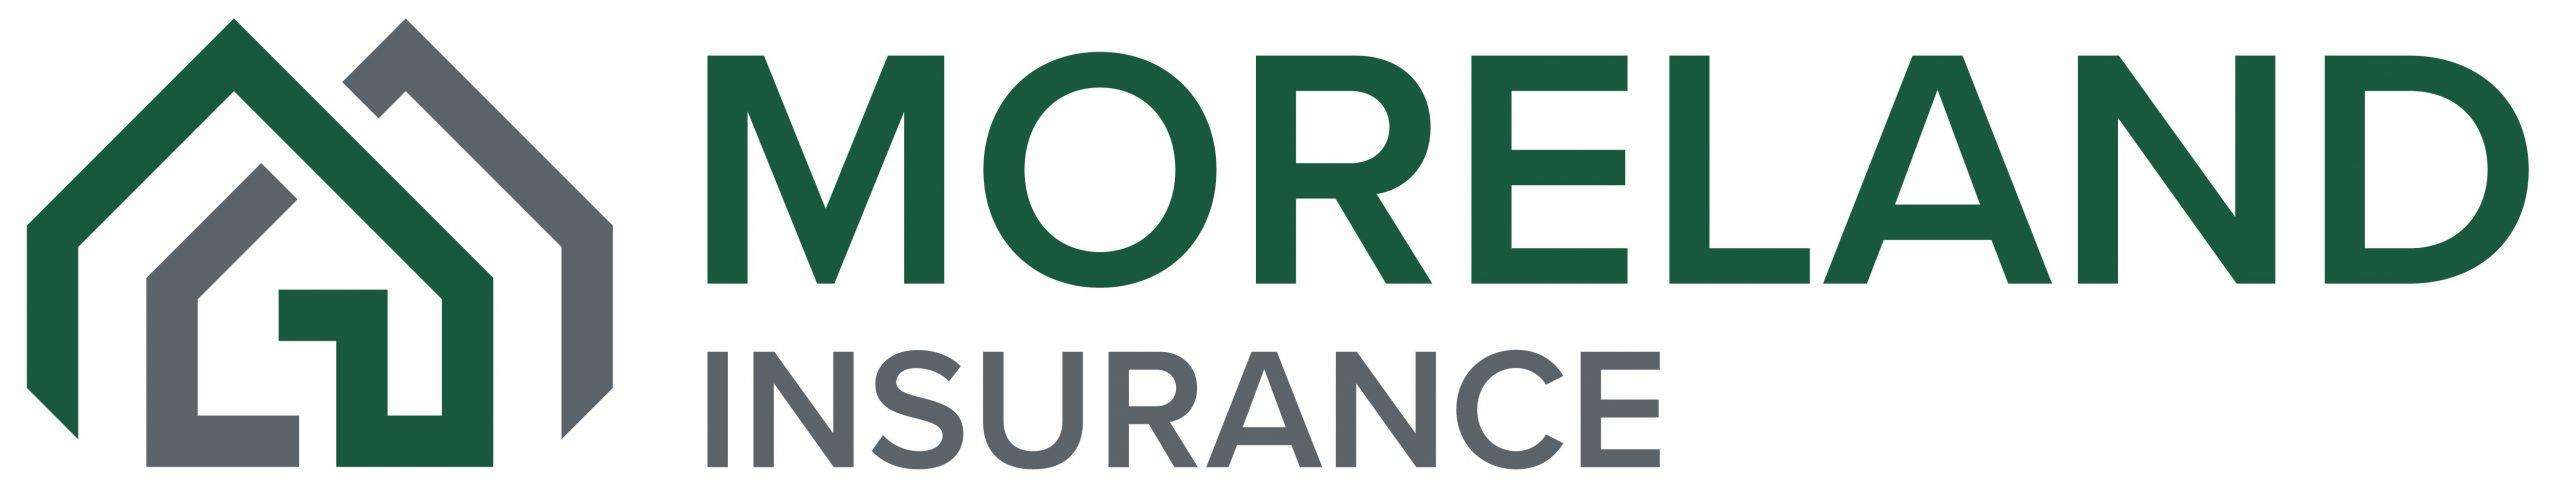 Moreland Insurance Logo